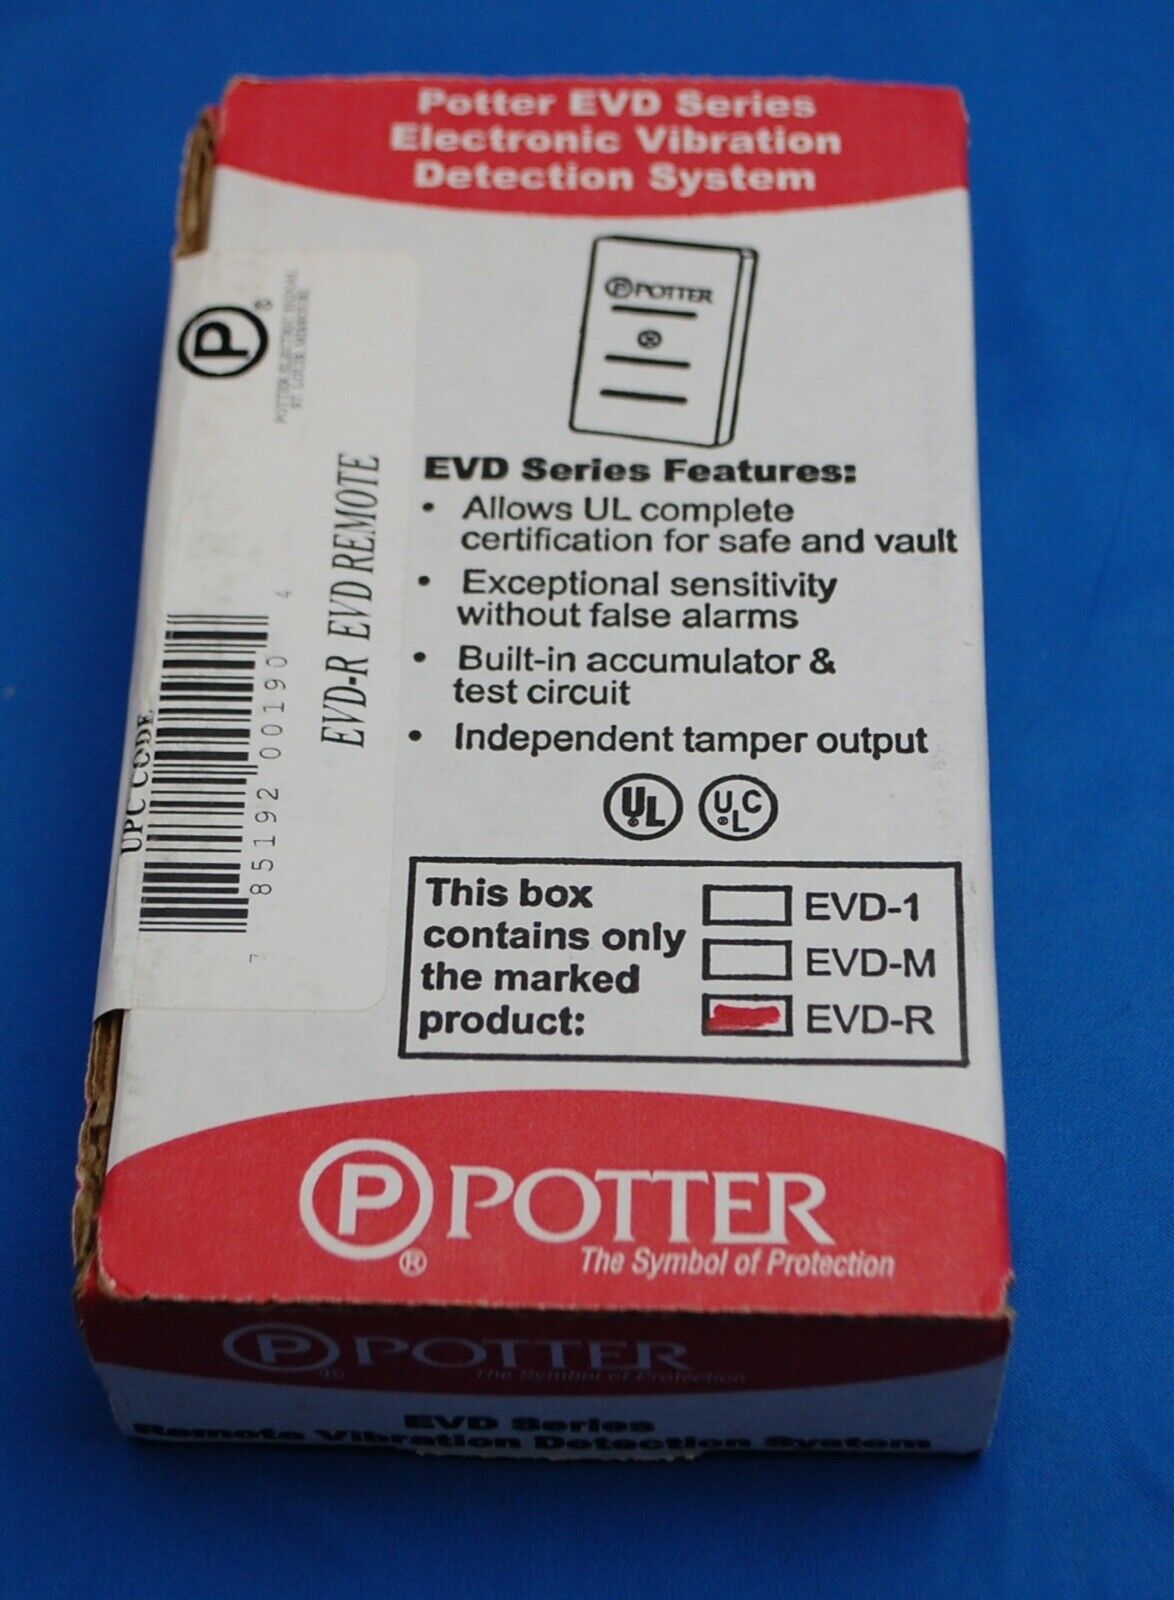 Potter Electric EVD-R / 2020260 /  EVD Series Remote Vibration Detection System